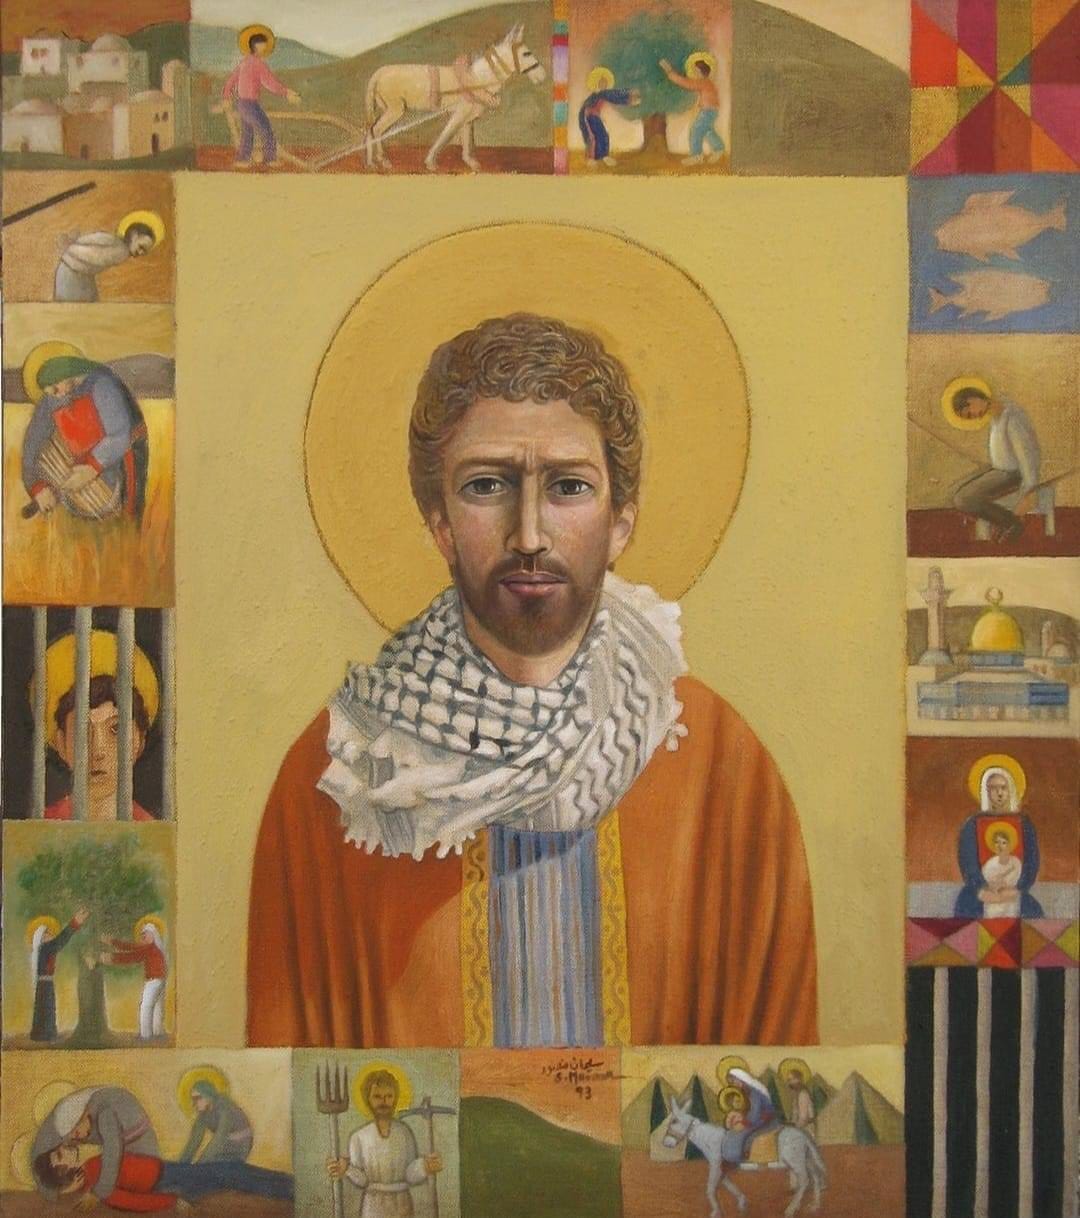 Palestine Info Center on X: "Jesus was Palestinian.  https://t.co/mMFowsstf3" / X